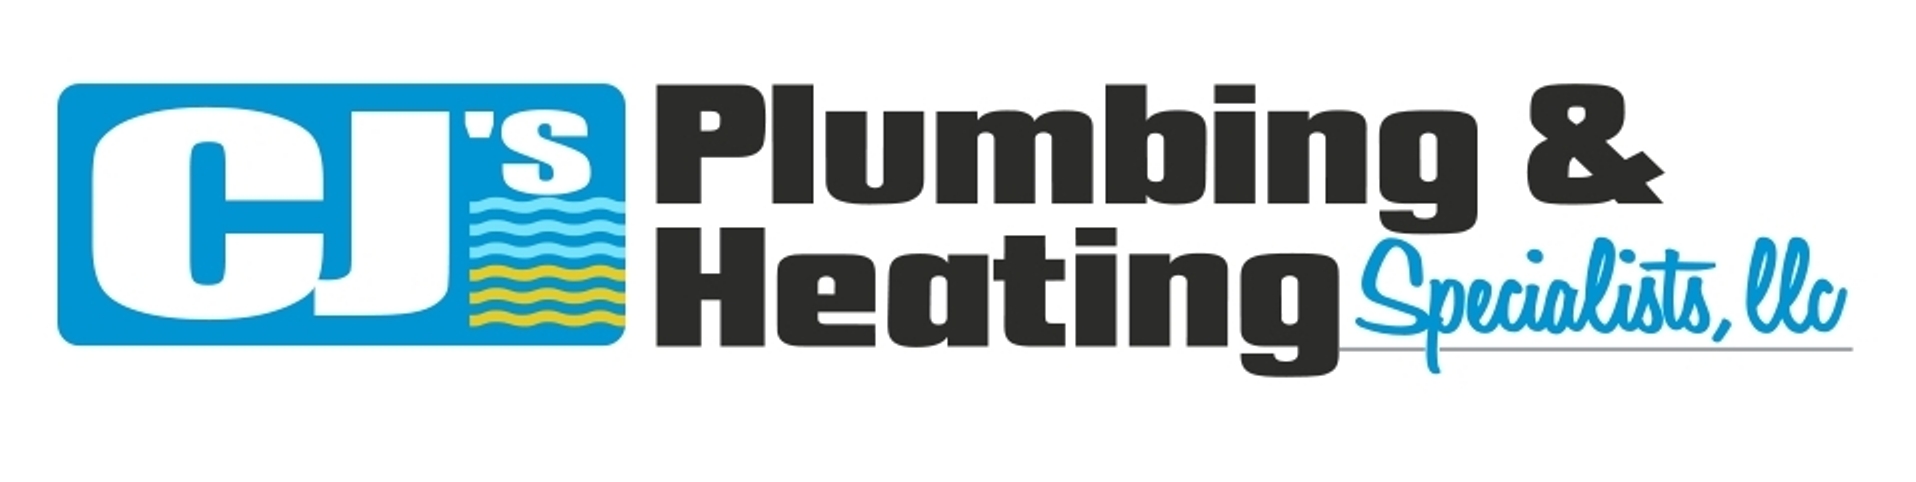 CJ's Plumbing & Heating Specialists, LLC Logo